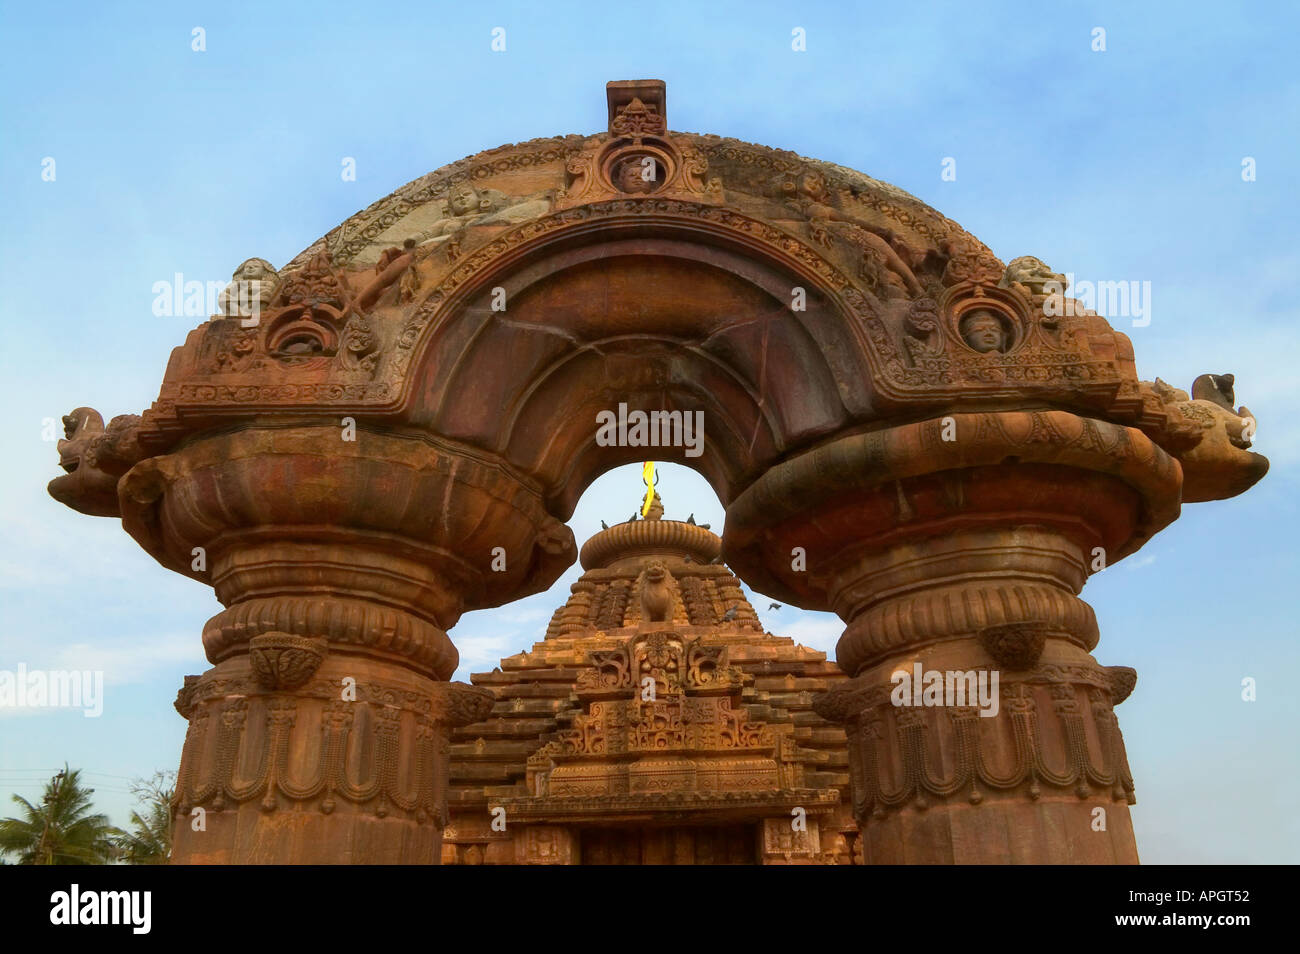 Mukteswar Mandir with ornate arched torana architrave with carving Bhubaneswar Orissa India Stock Photo